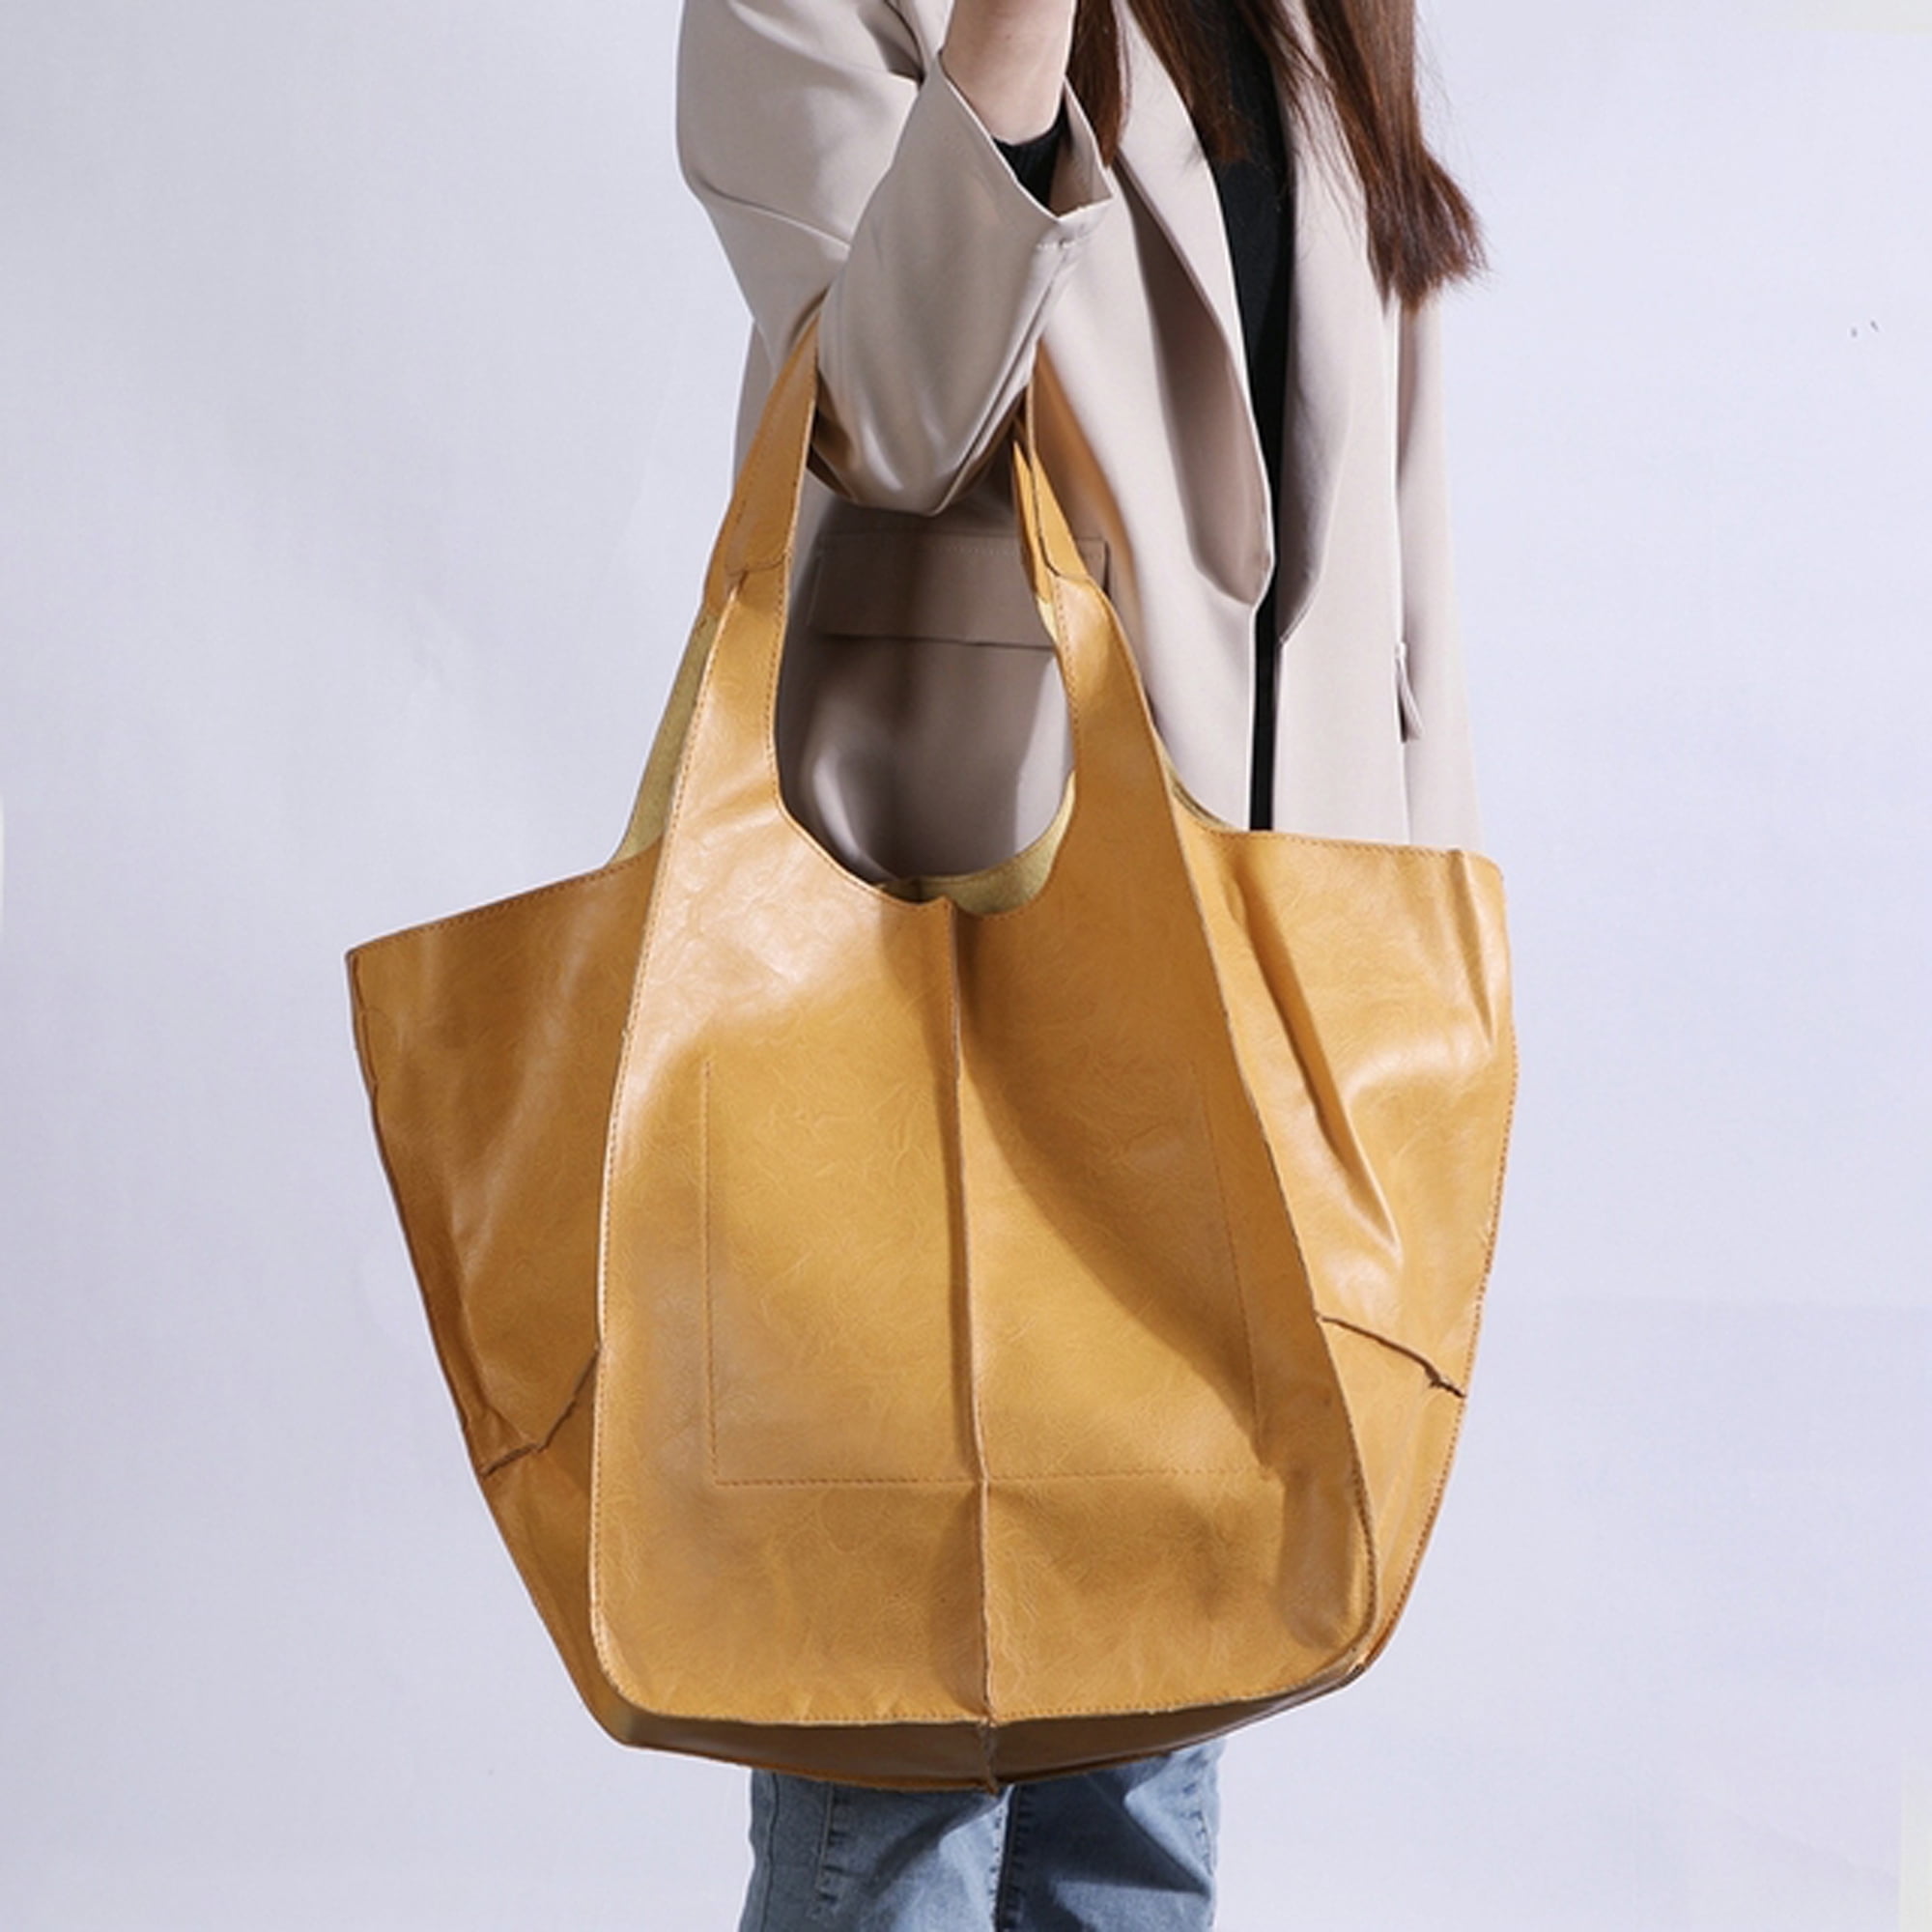 CoCopeaunts Fashion Shoulder Bag for Women Large Capacity Handbag